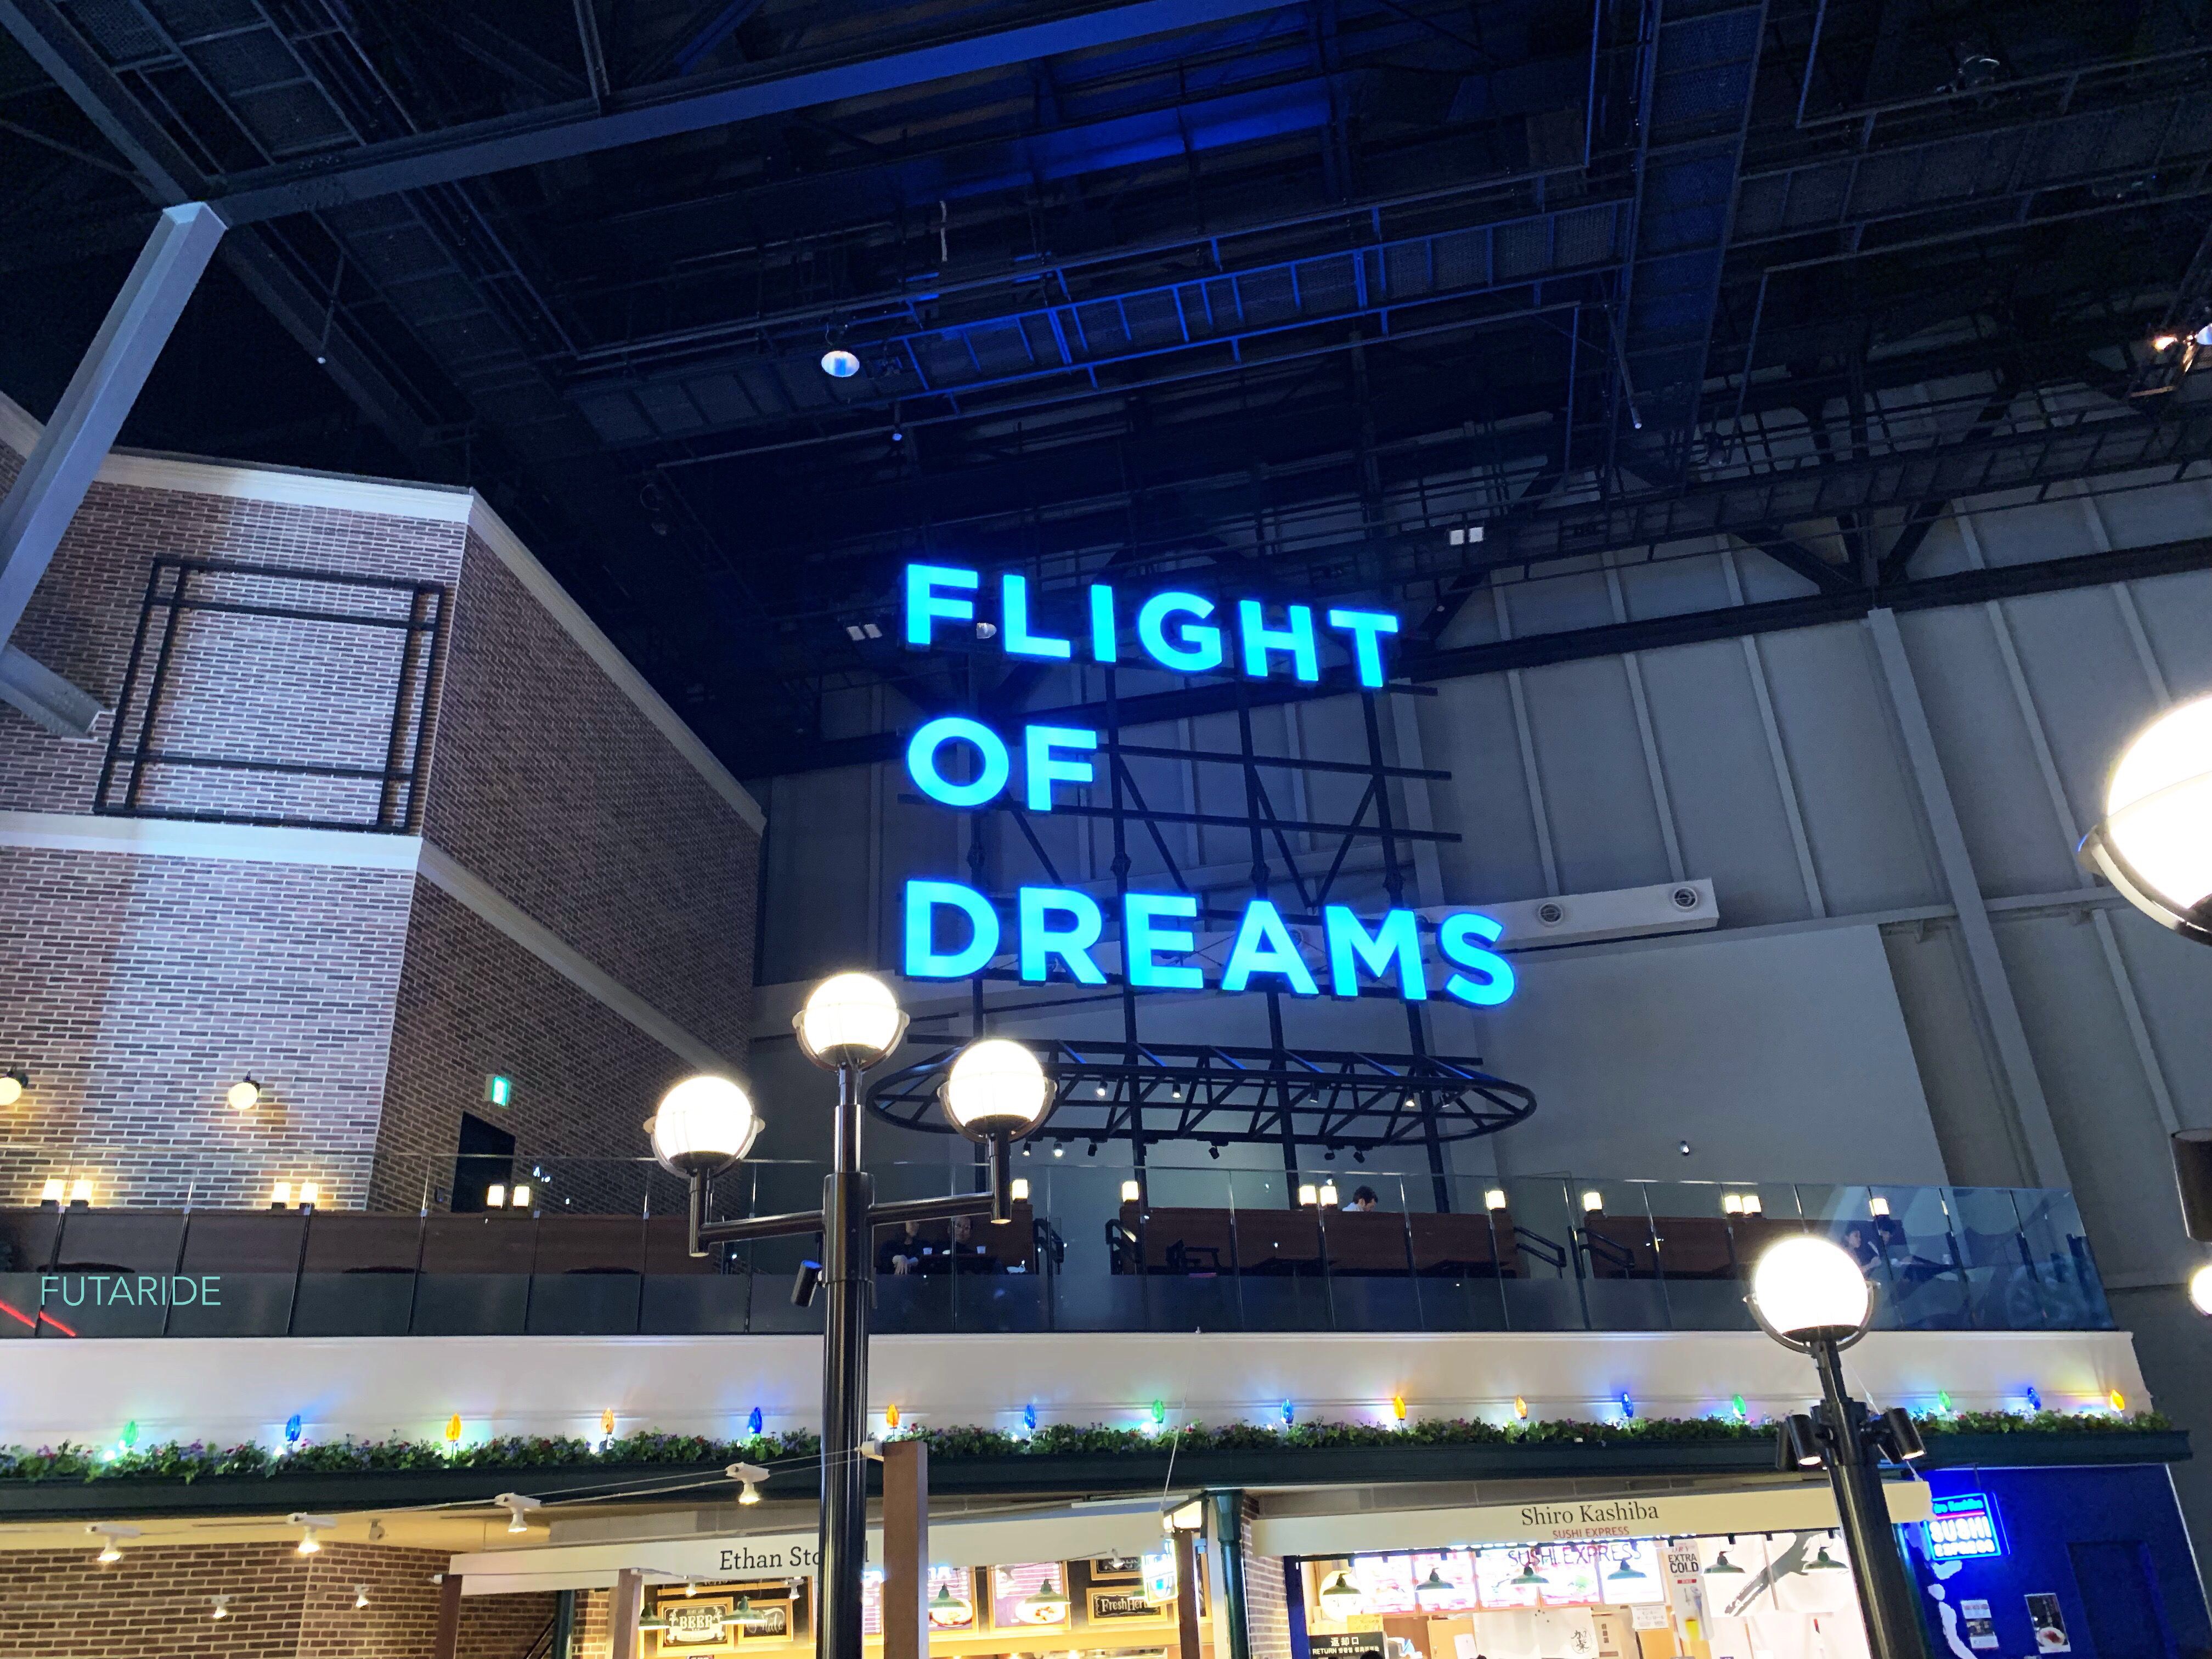 FLIGHT OF DREAMS